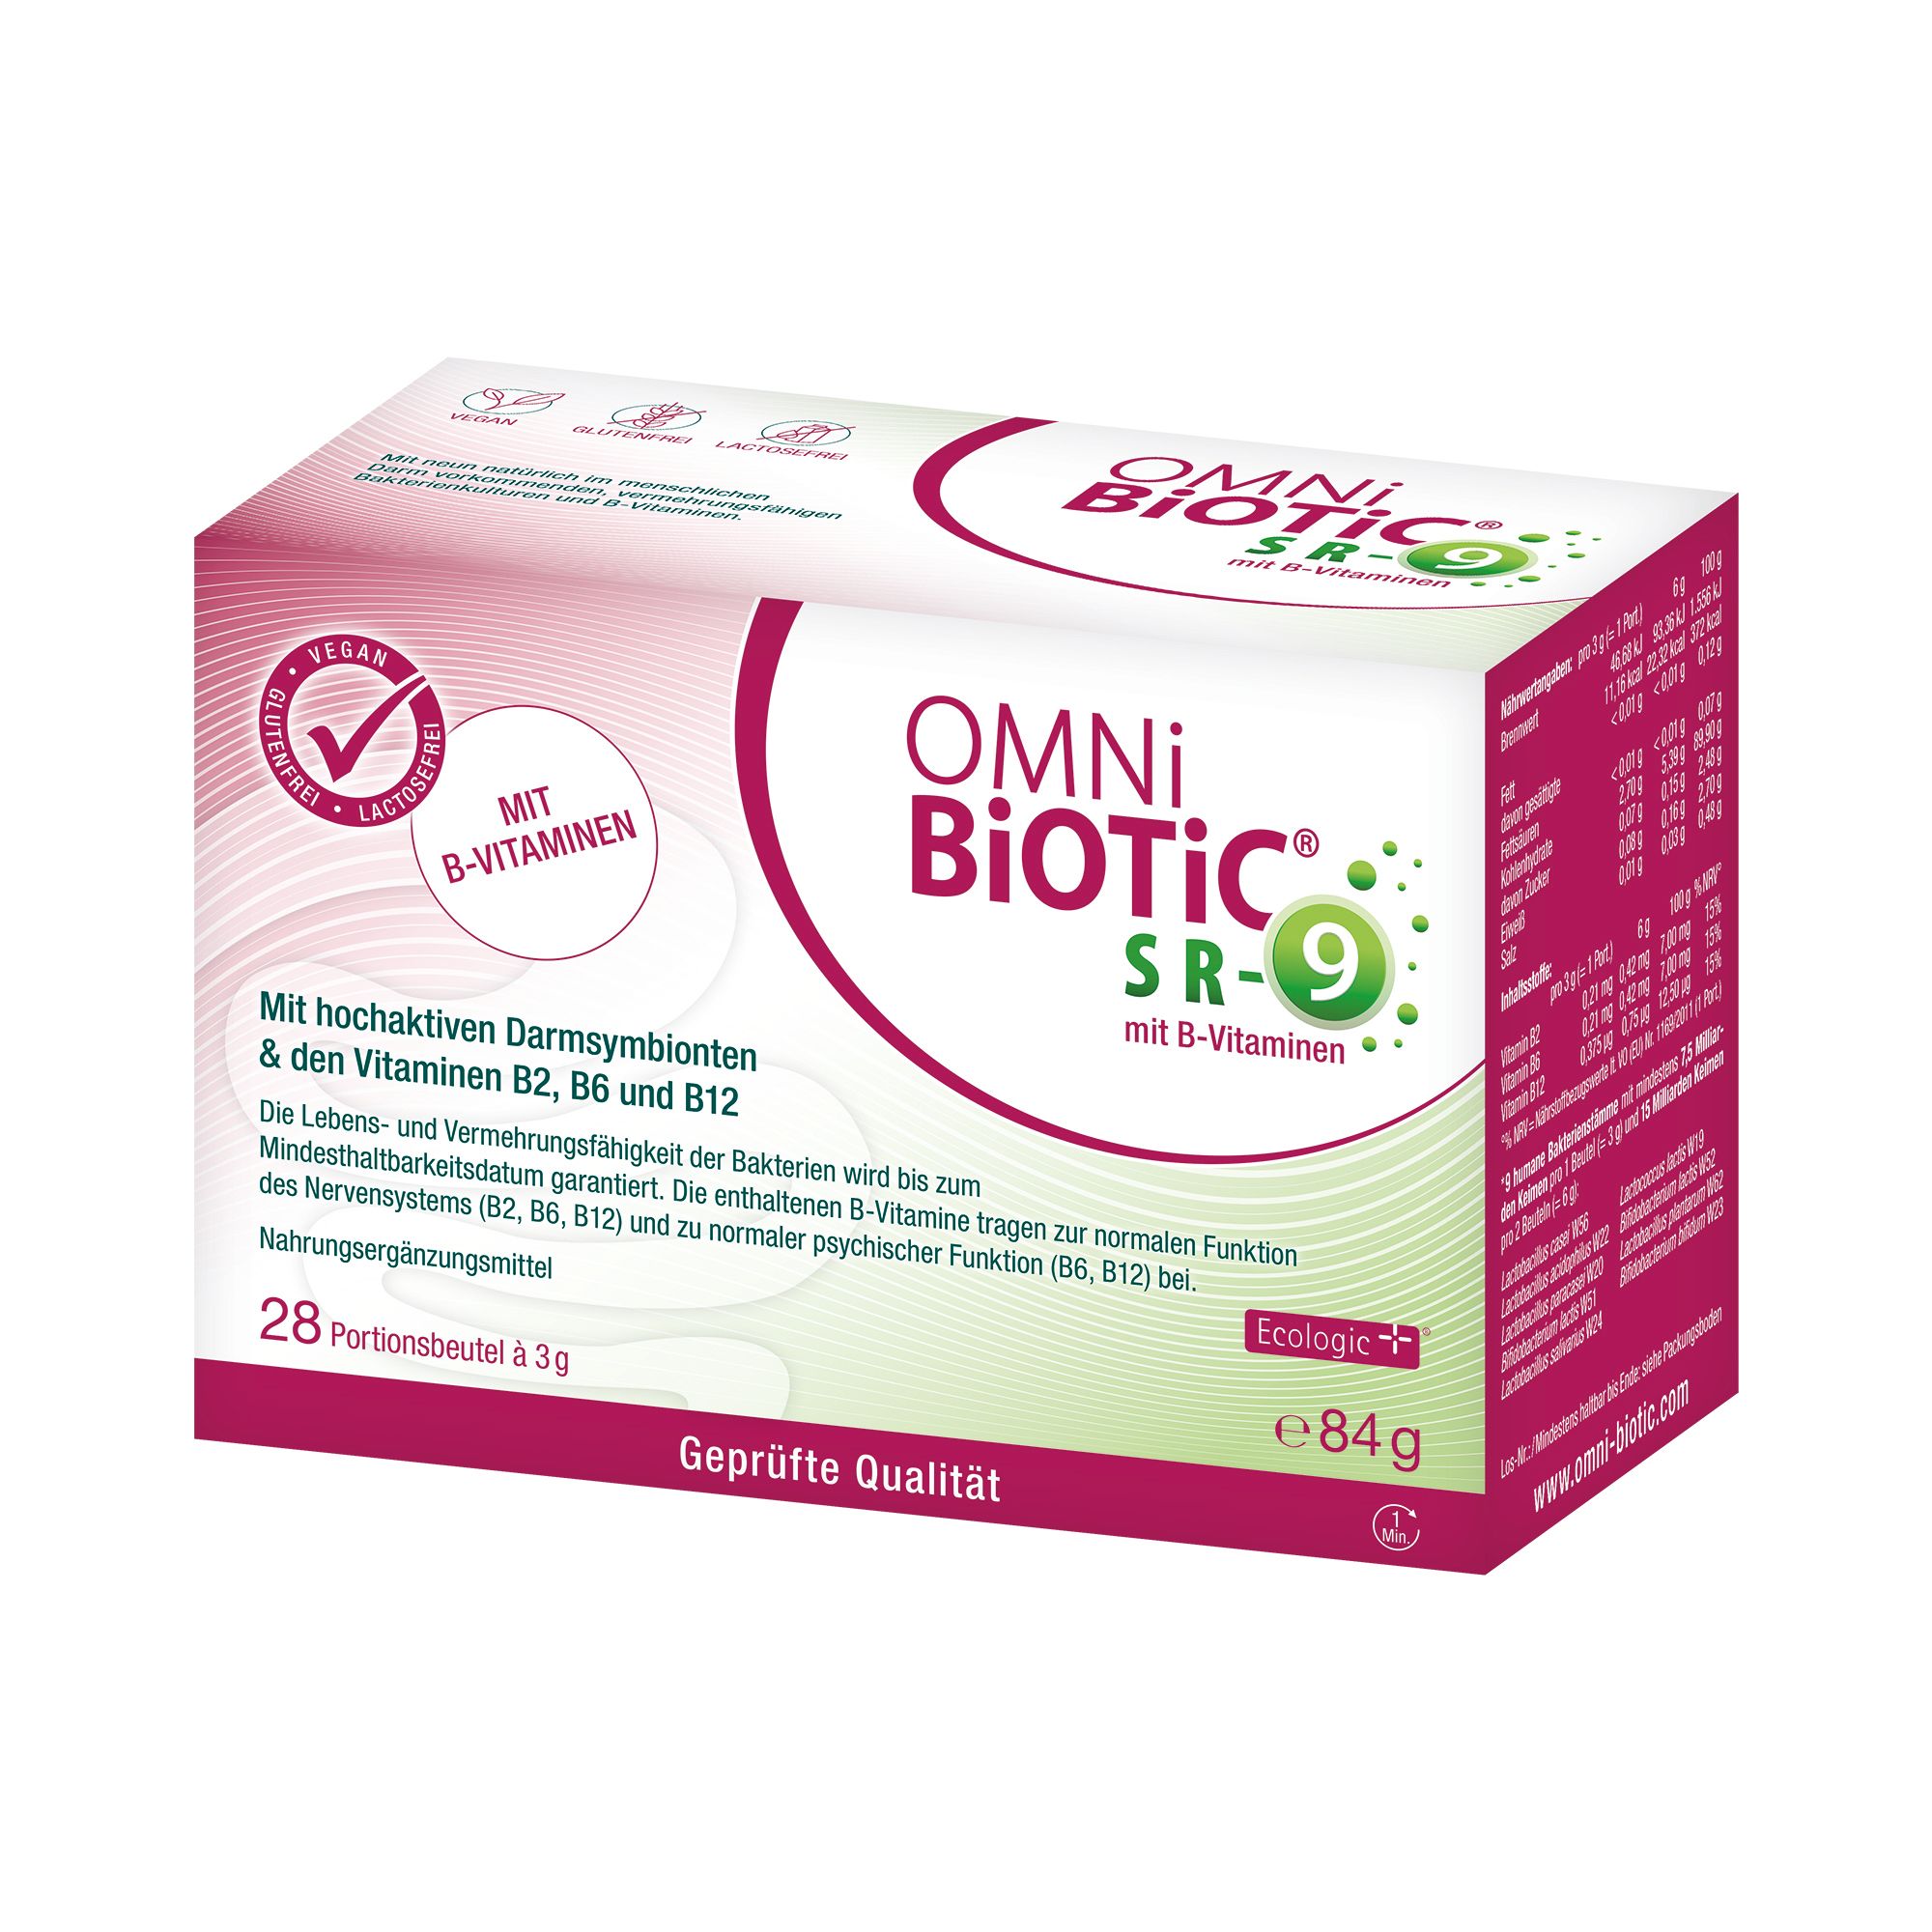 OMNi BiOTiC SR-9 mit B-Vitaminen